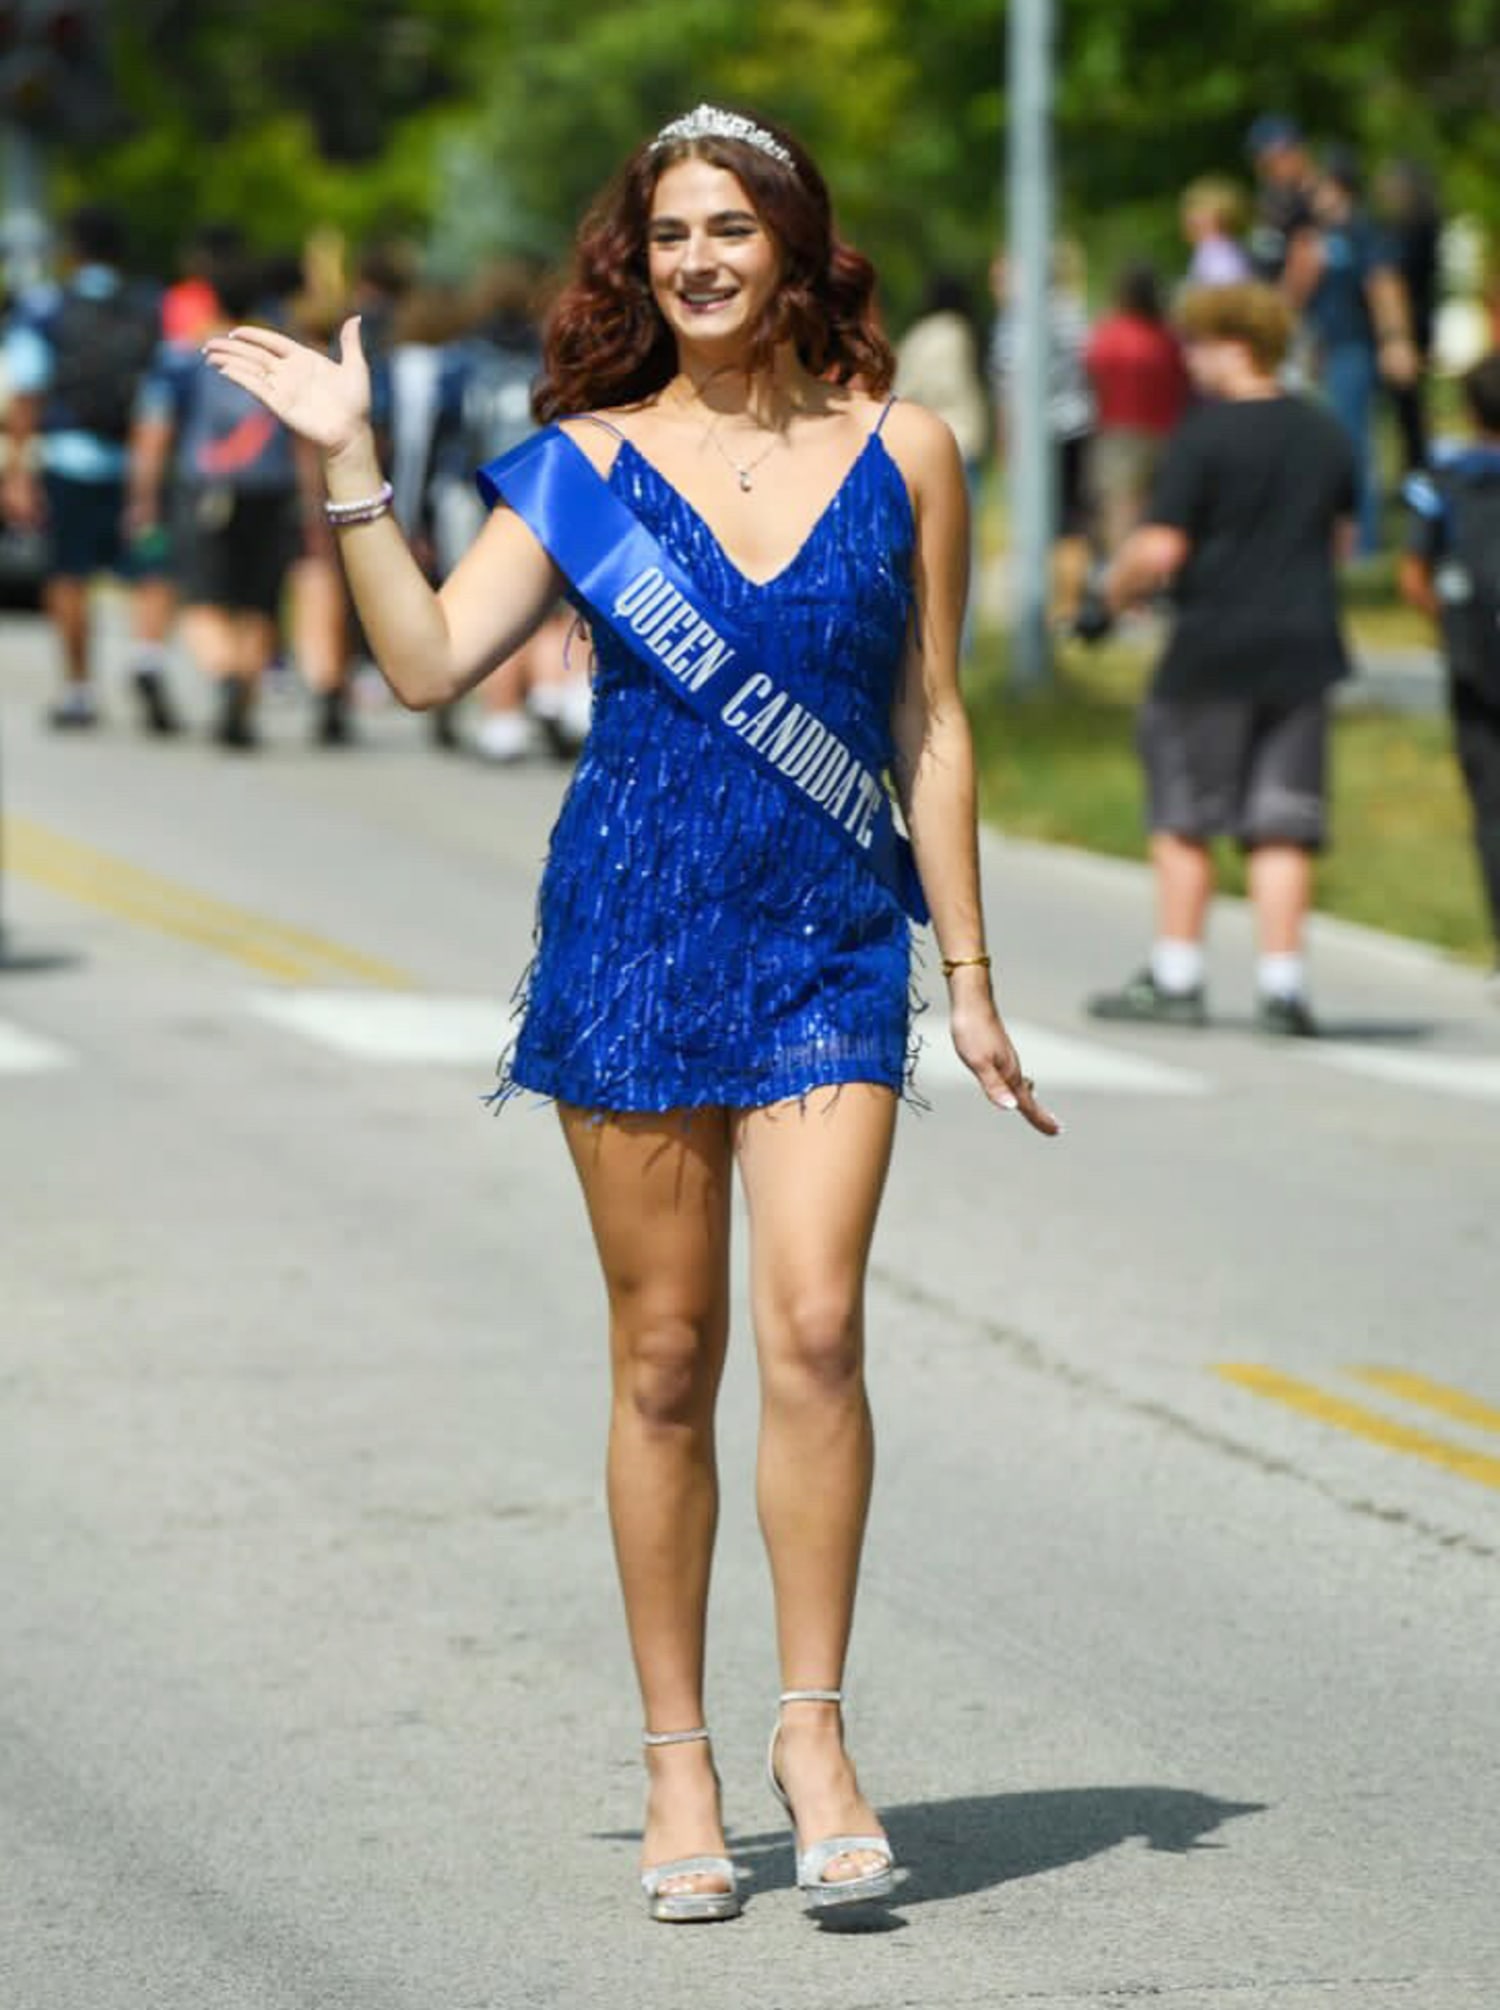 Florida high school crowns first transgender homecoming queen